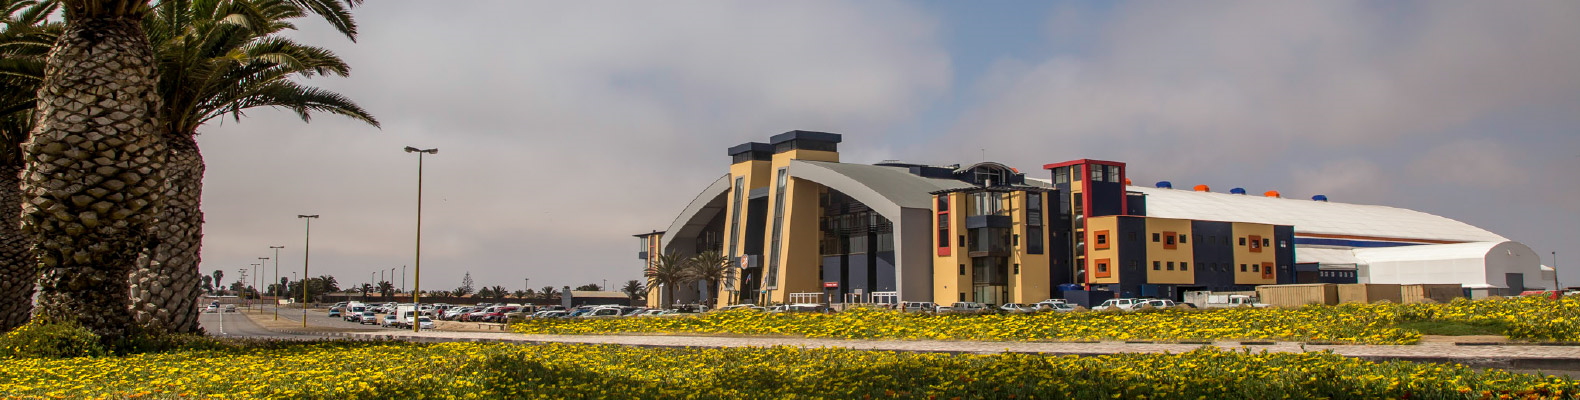 Dome Conference Centre, Swakopmund, Namibia